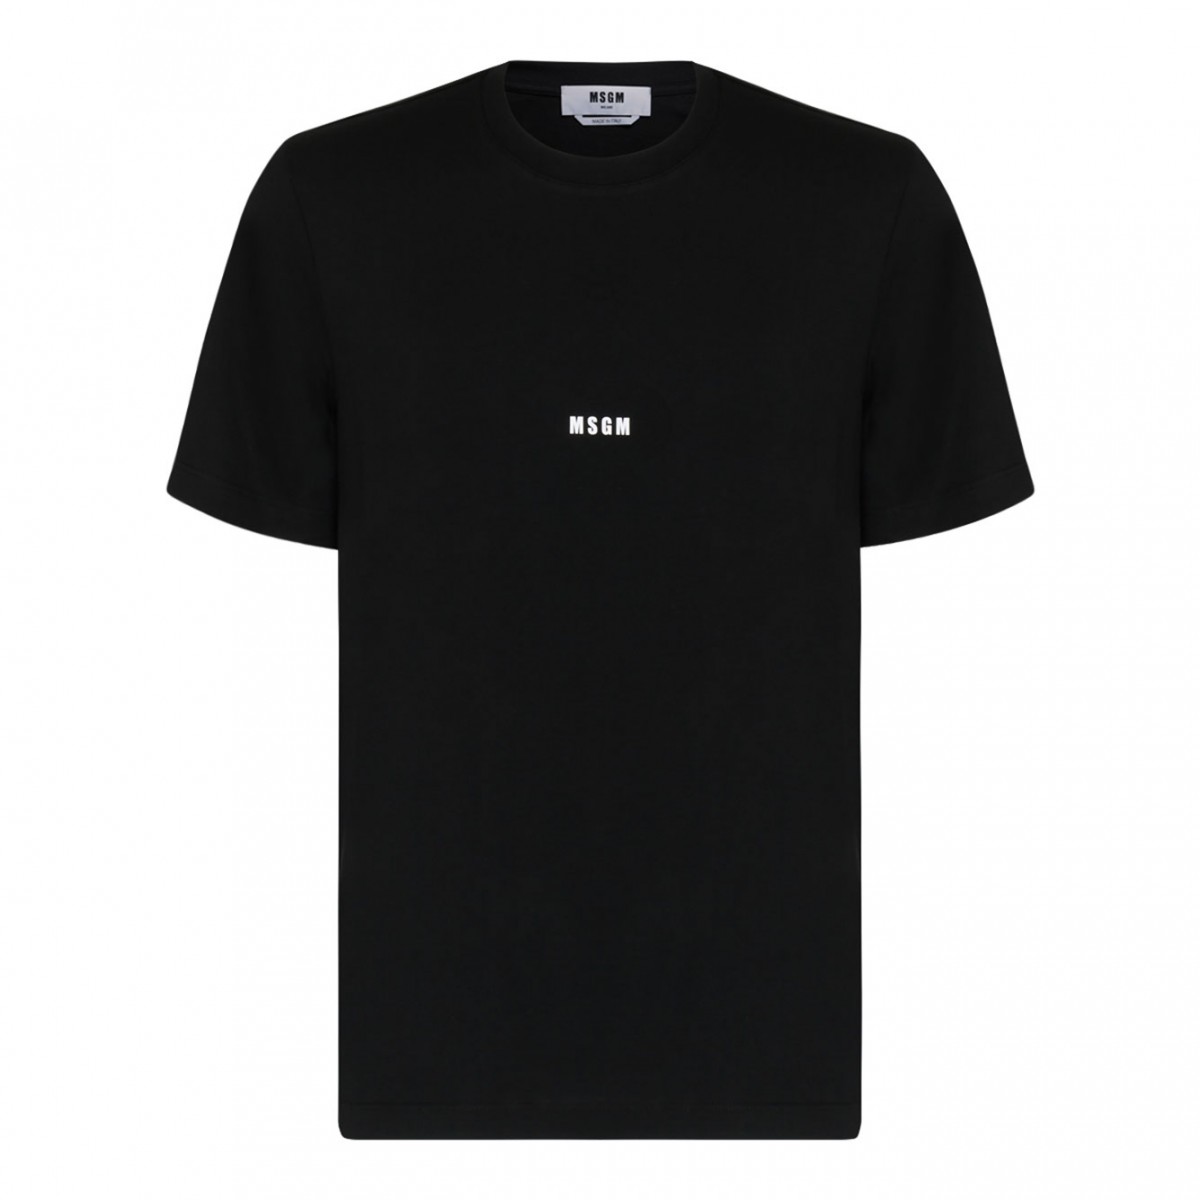 MSGM Black Cotton Logo Print T-Shirt.